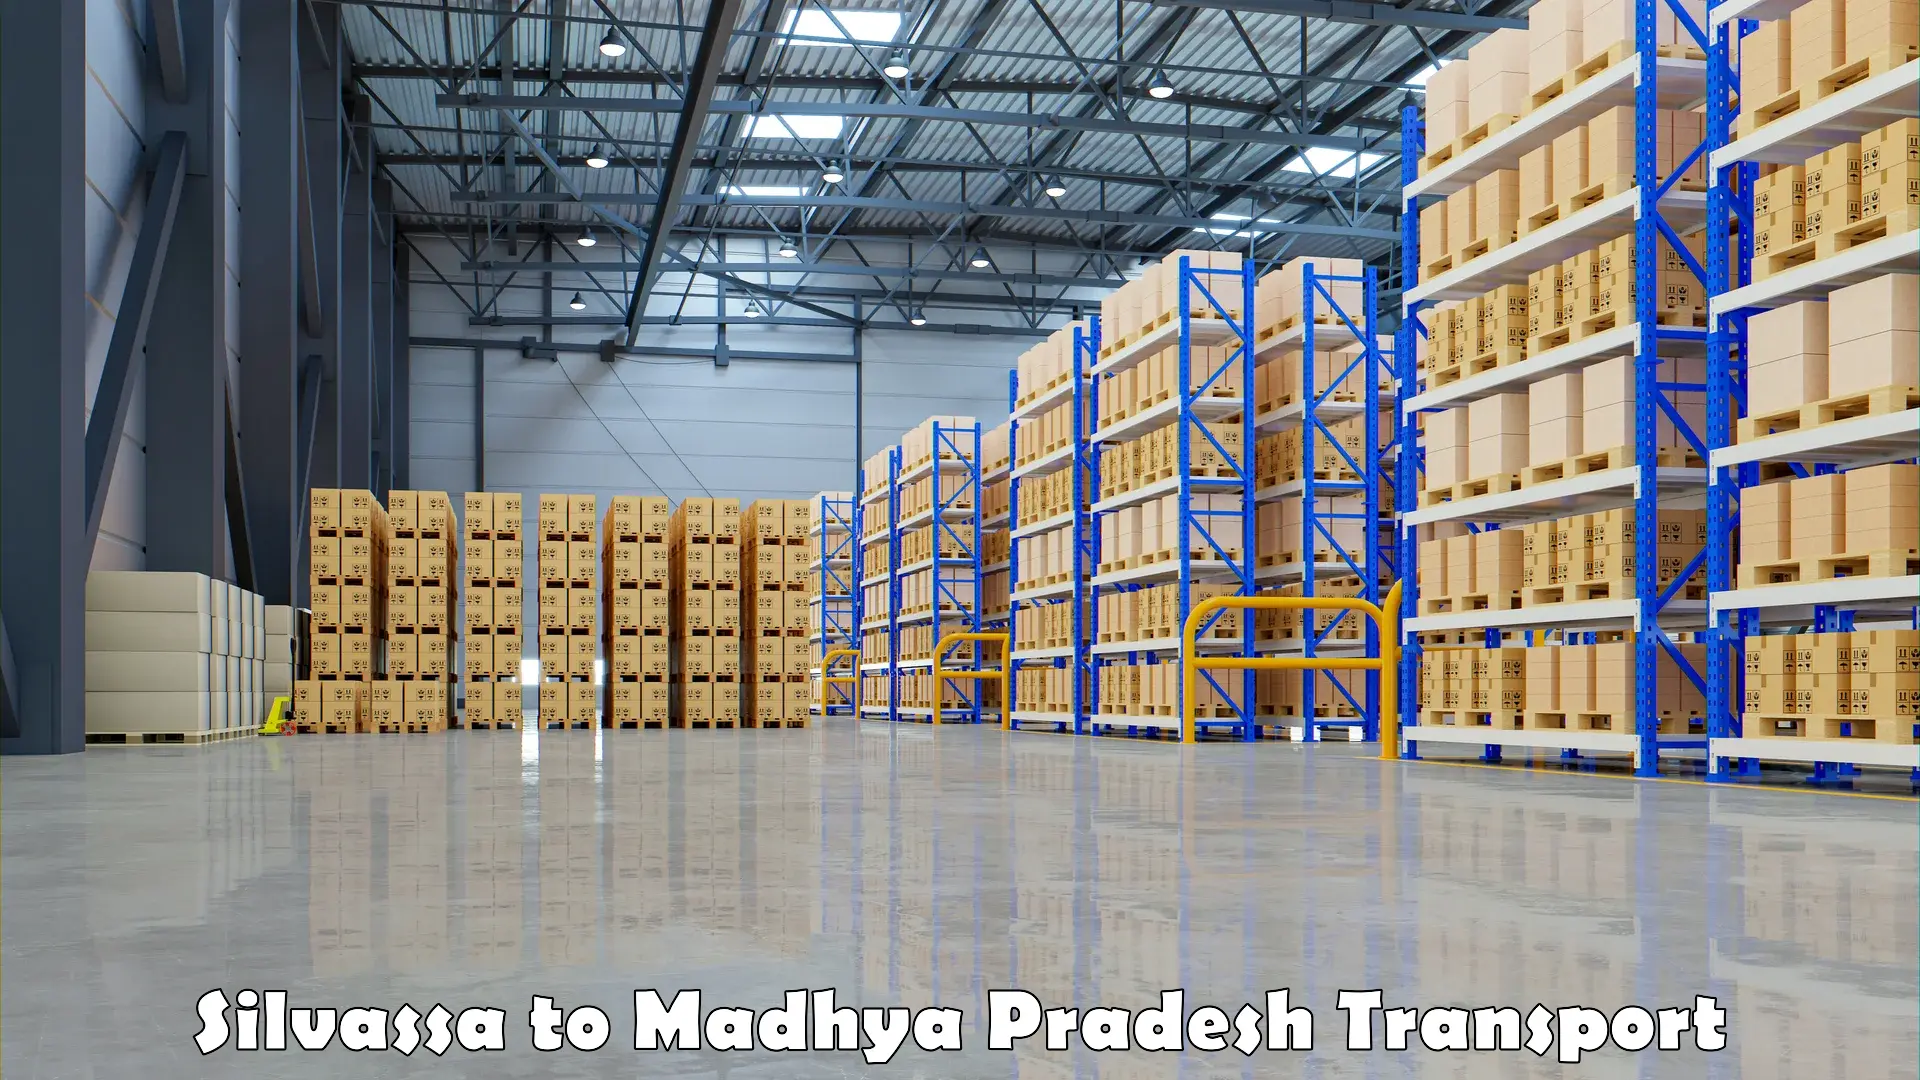 Truck transport companies in India Silvassa to Nagda